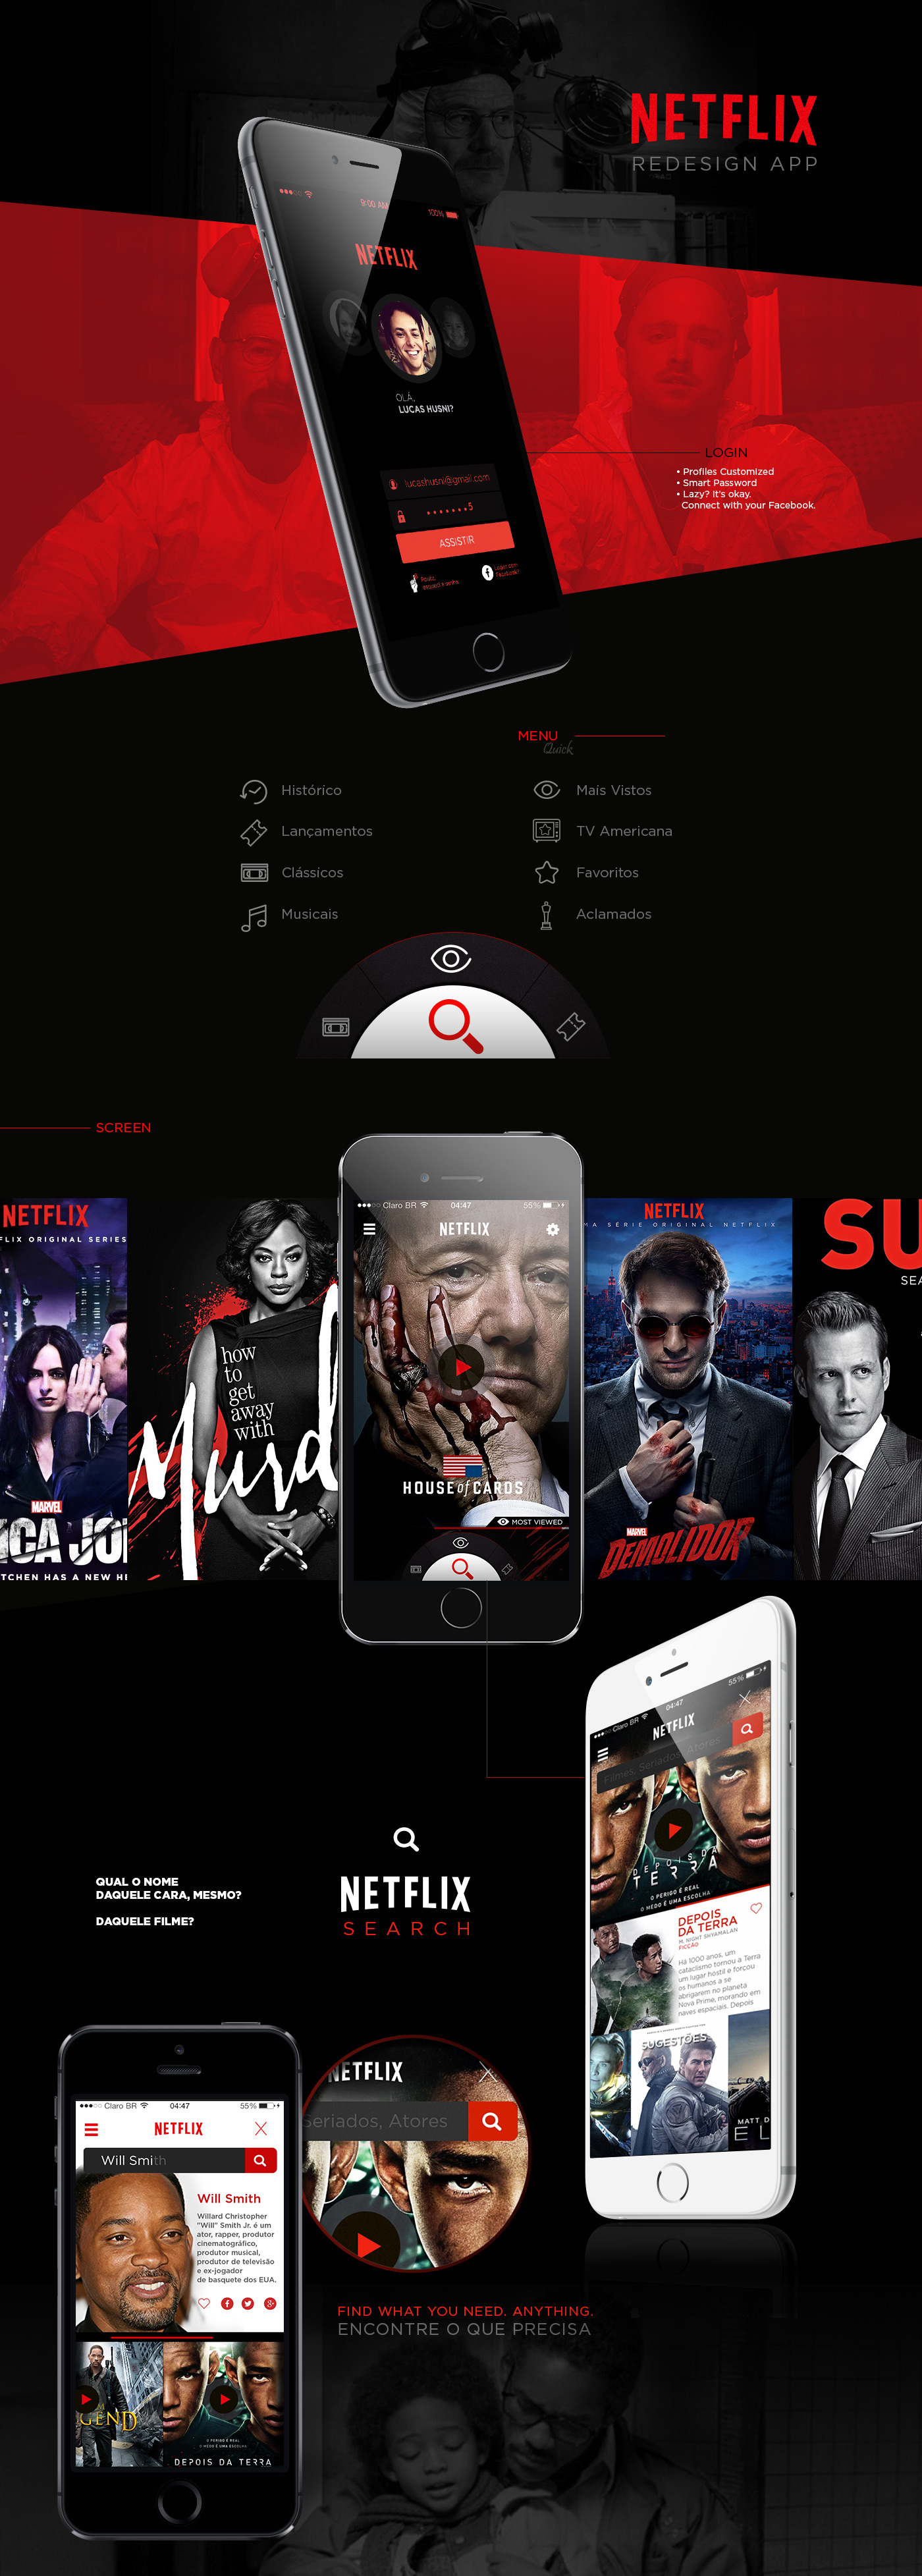 ux UI husni Netflix app ios7 redesign Brasil brasilia iphone